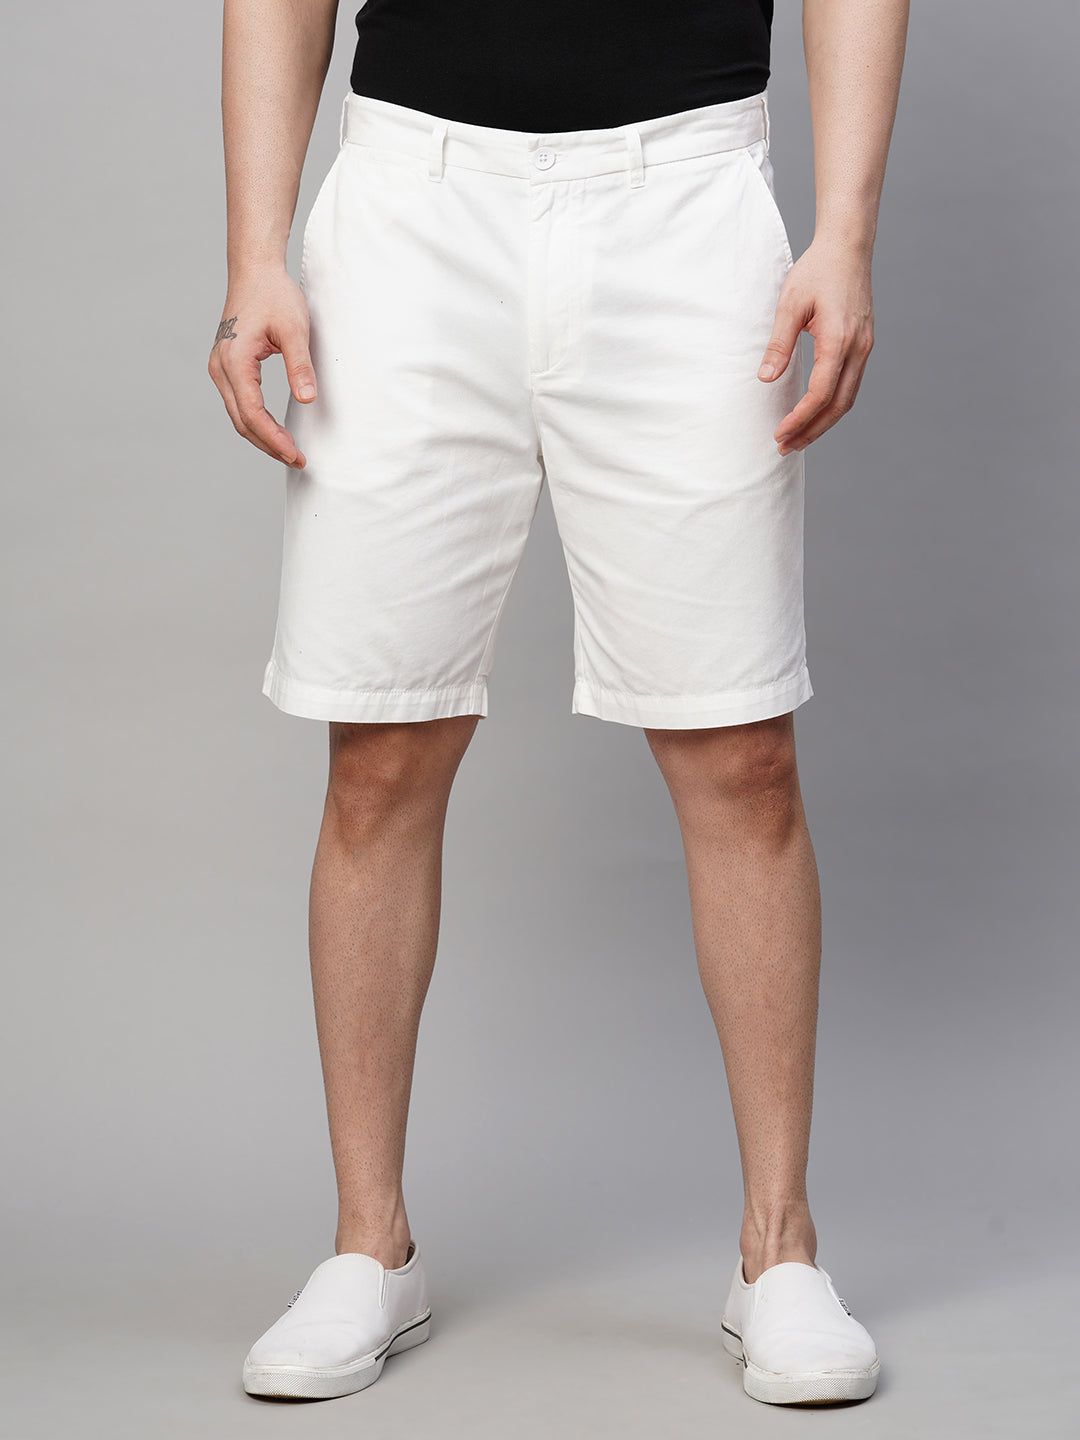 Men's Cotton White Regular Fit Shorts